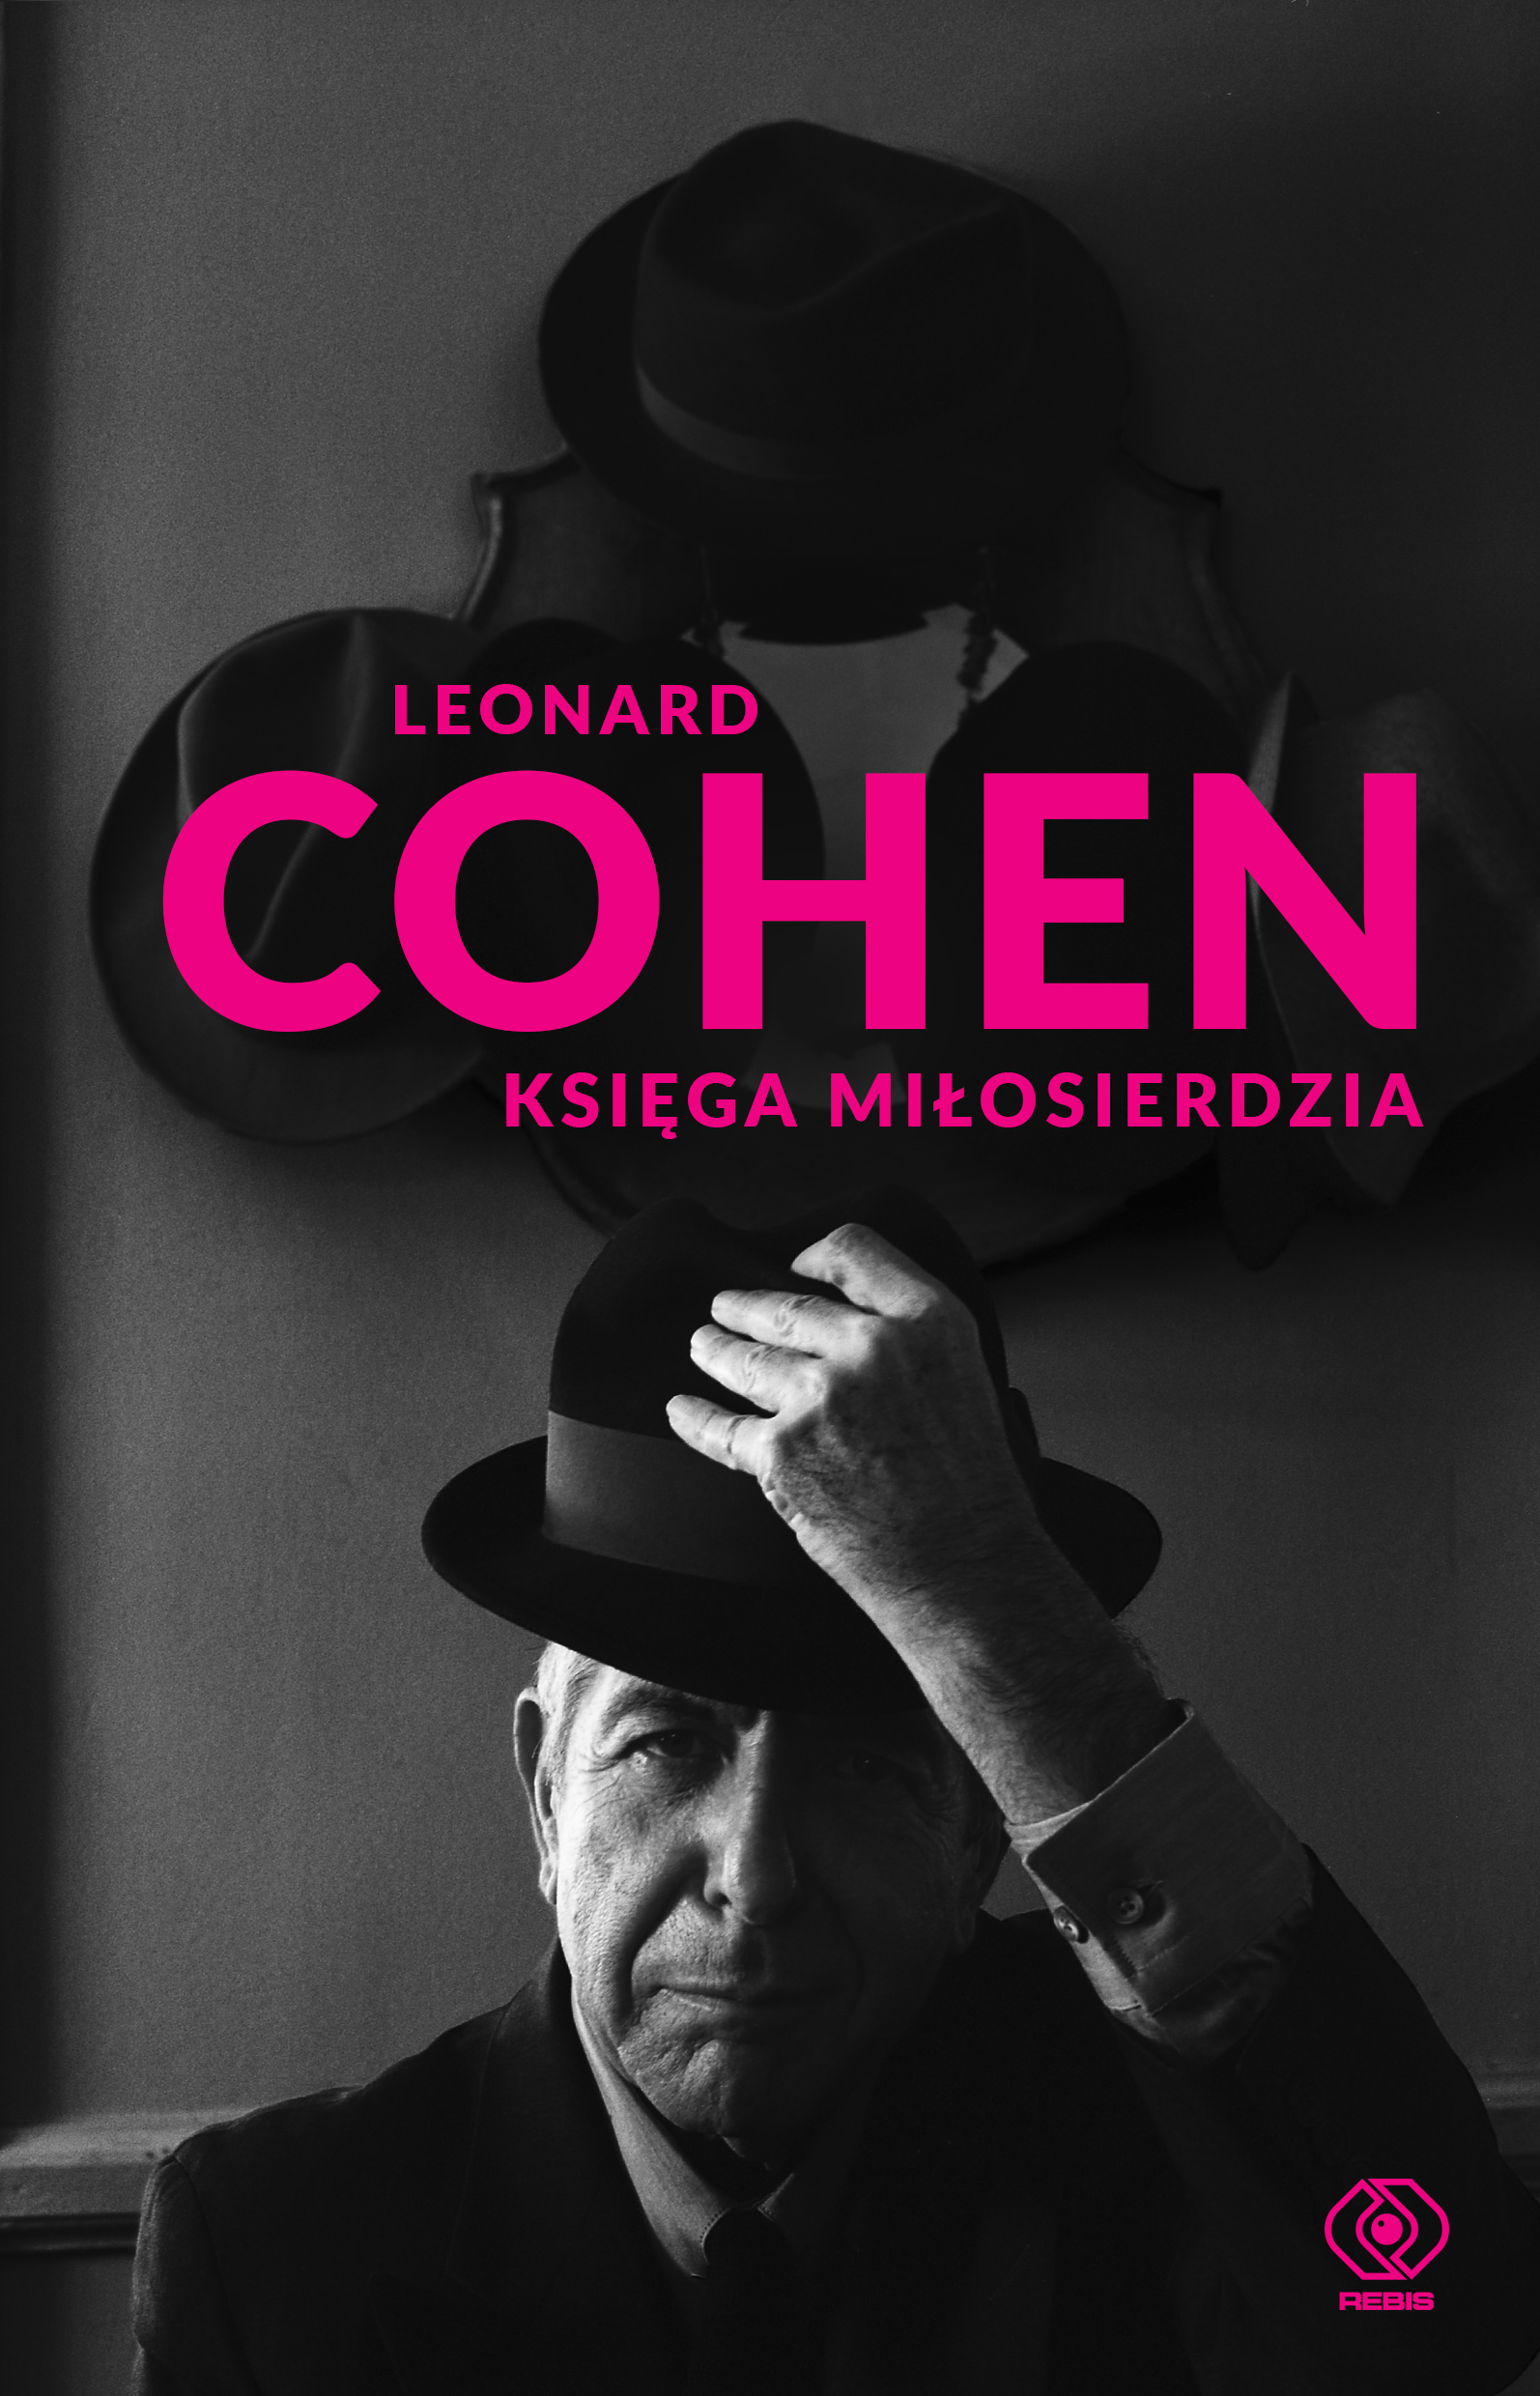 "Księga miłosierdzia", Leonard Cohen , 